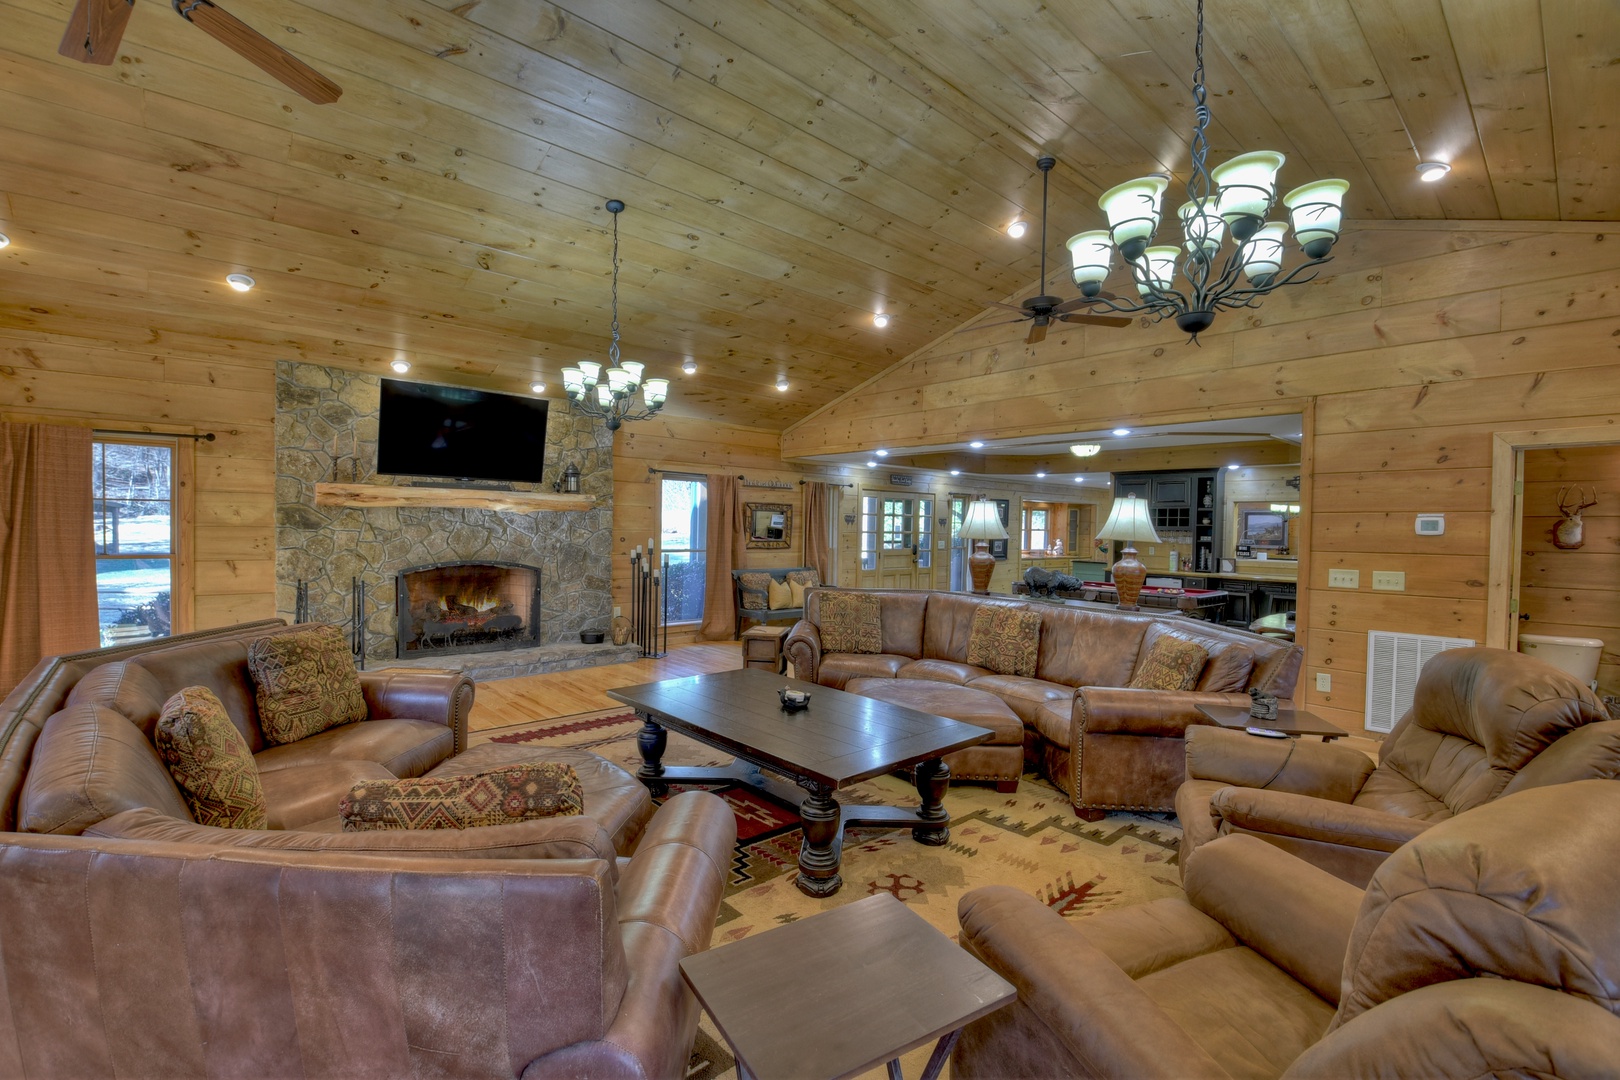 Stanley Creek Lodge- Living room area